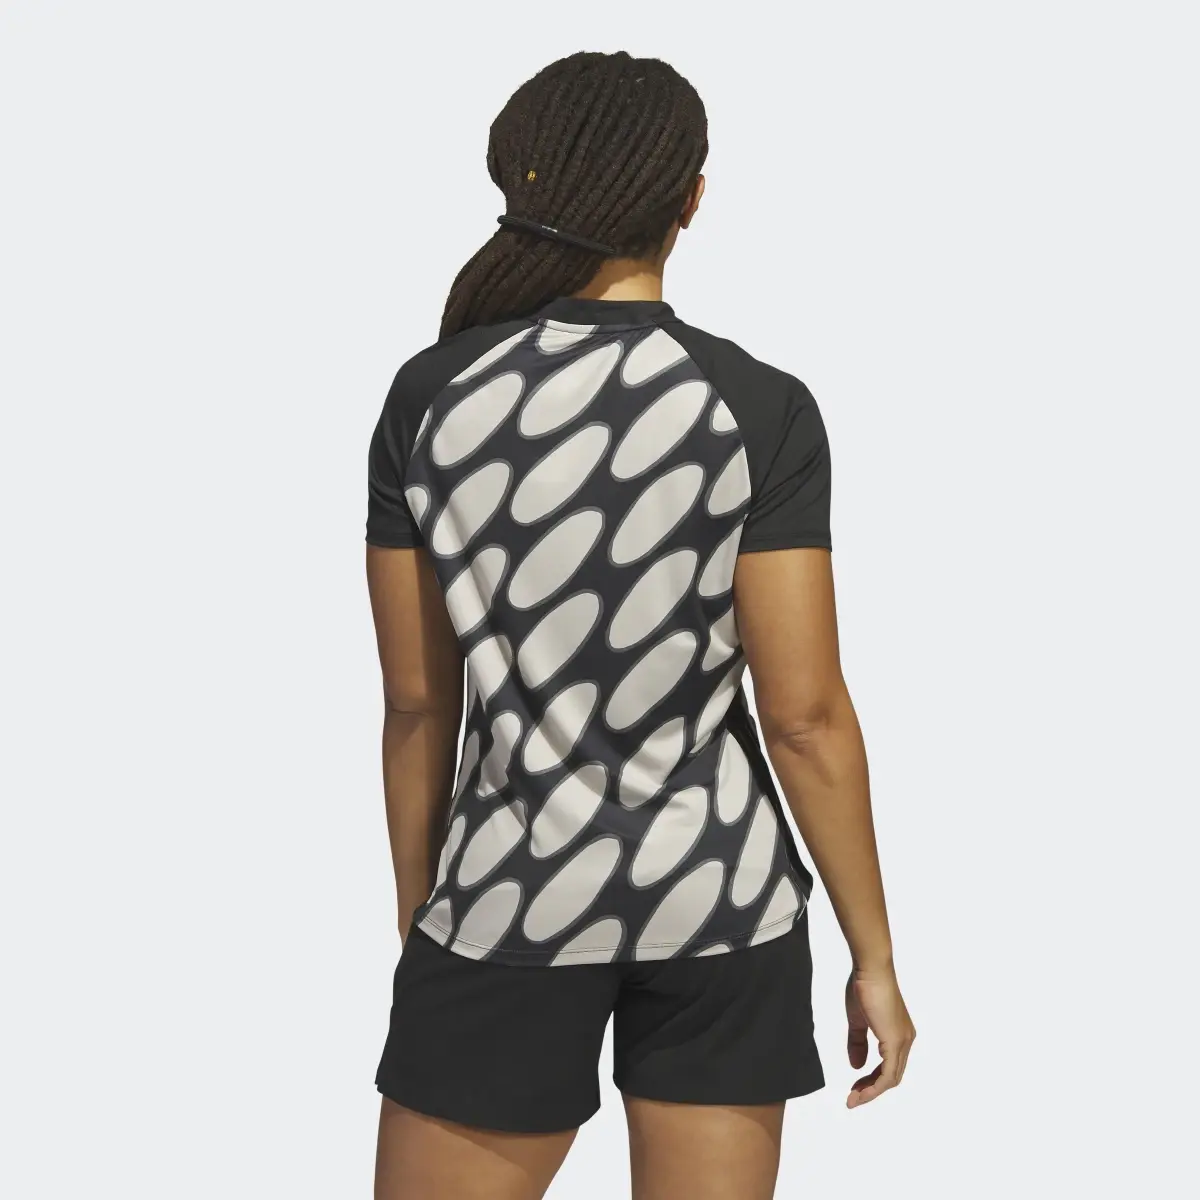 Adidas Marimekko Polo Shirt. 3